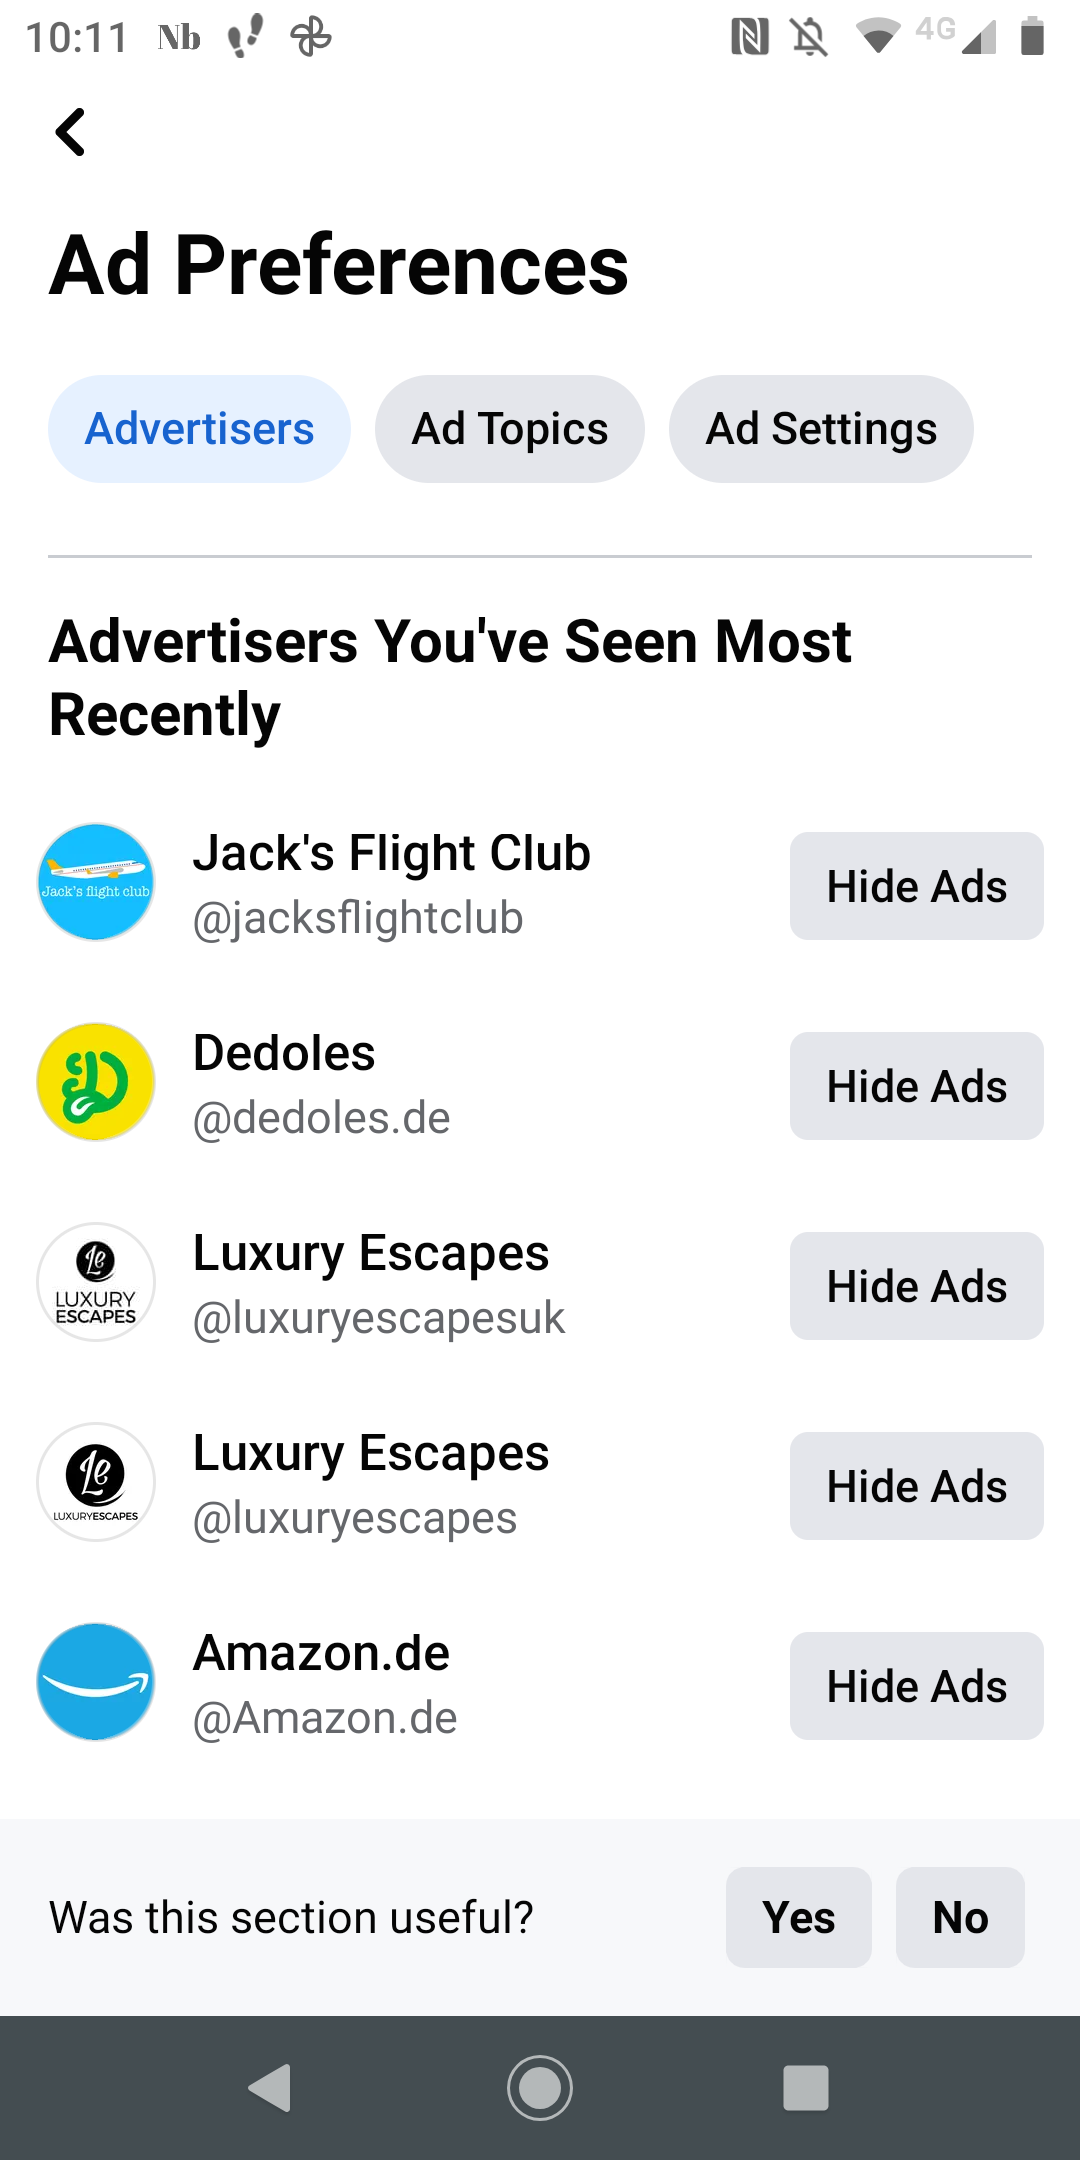 Facebook ad settings home screen